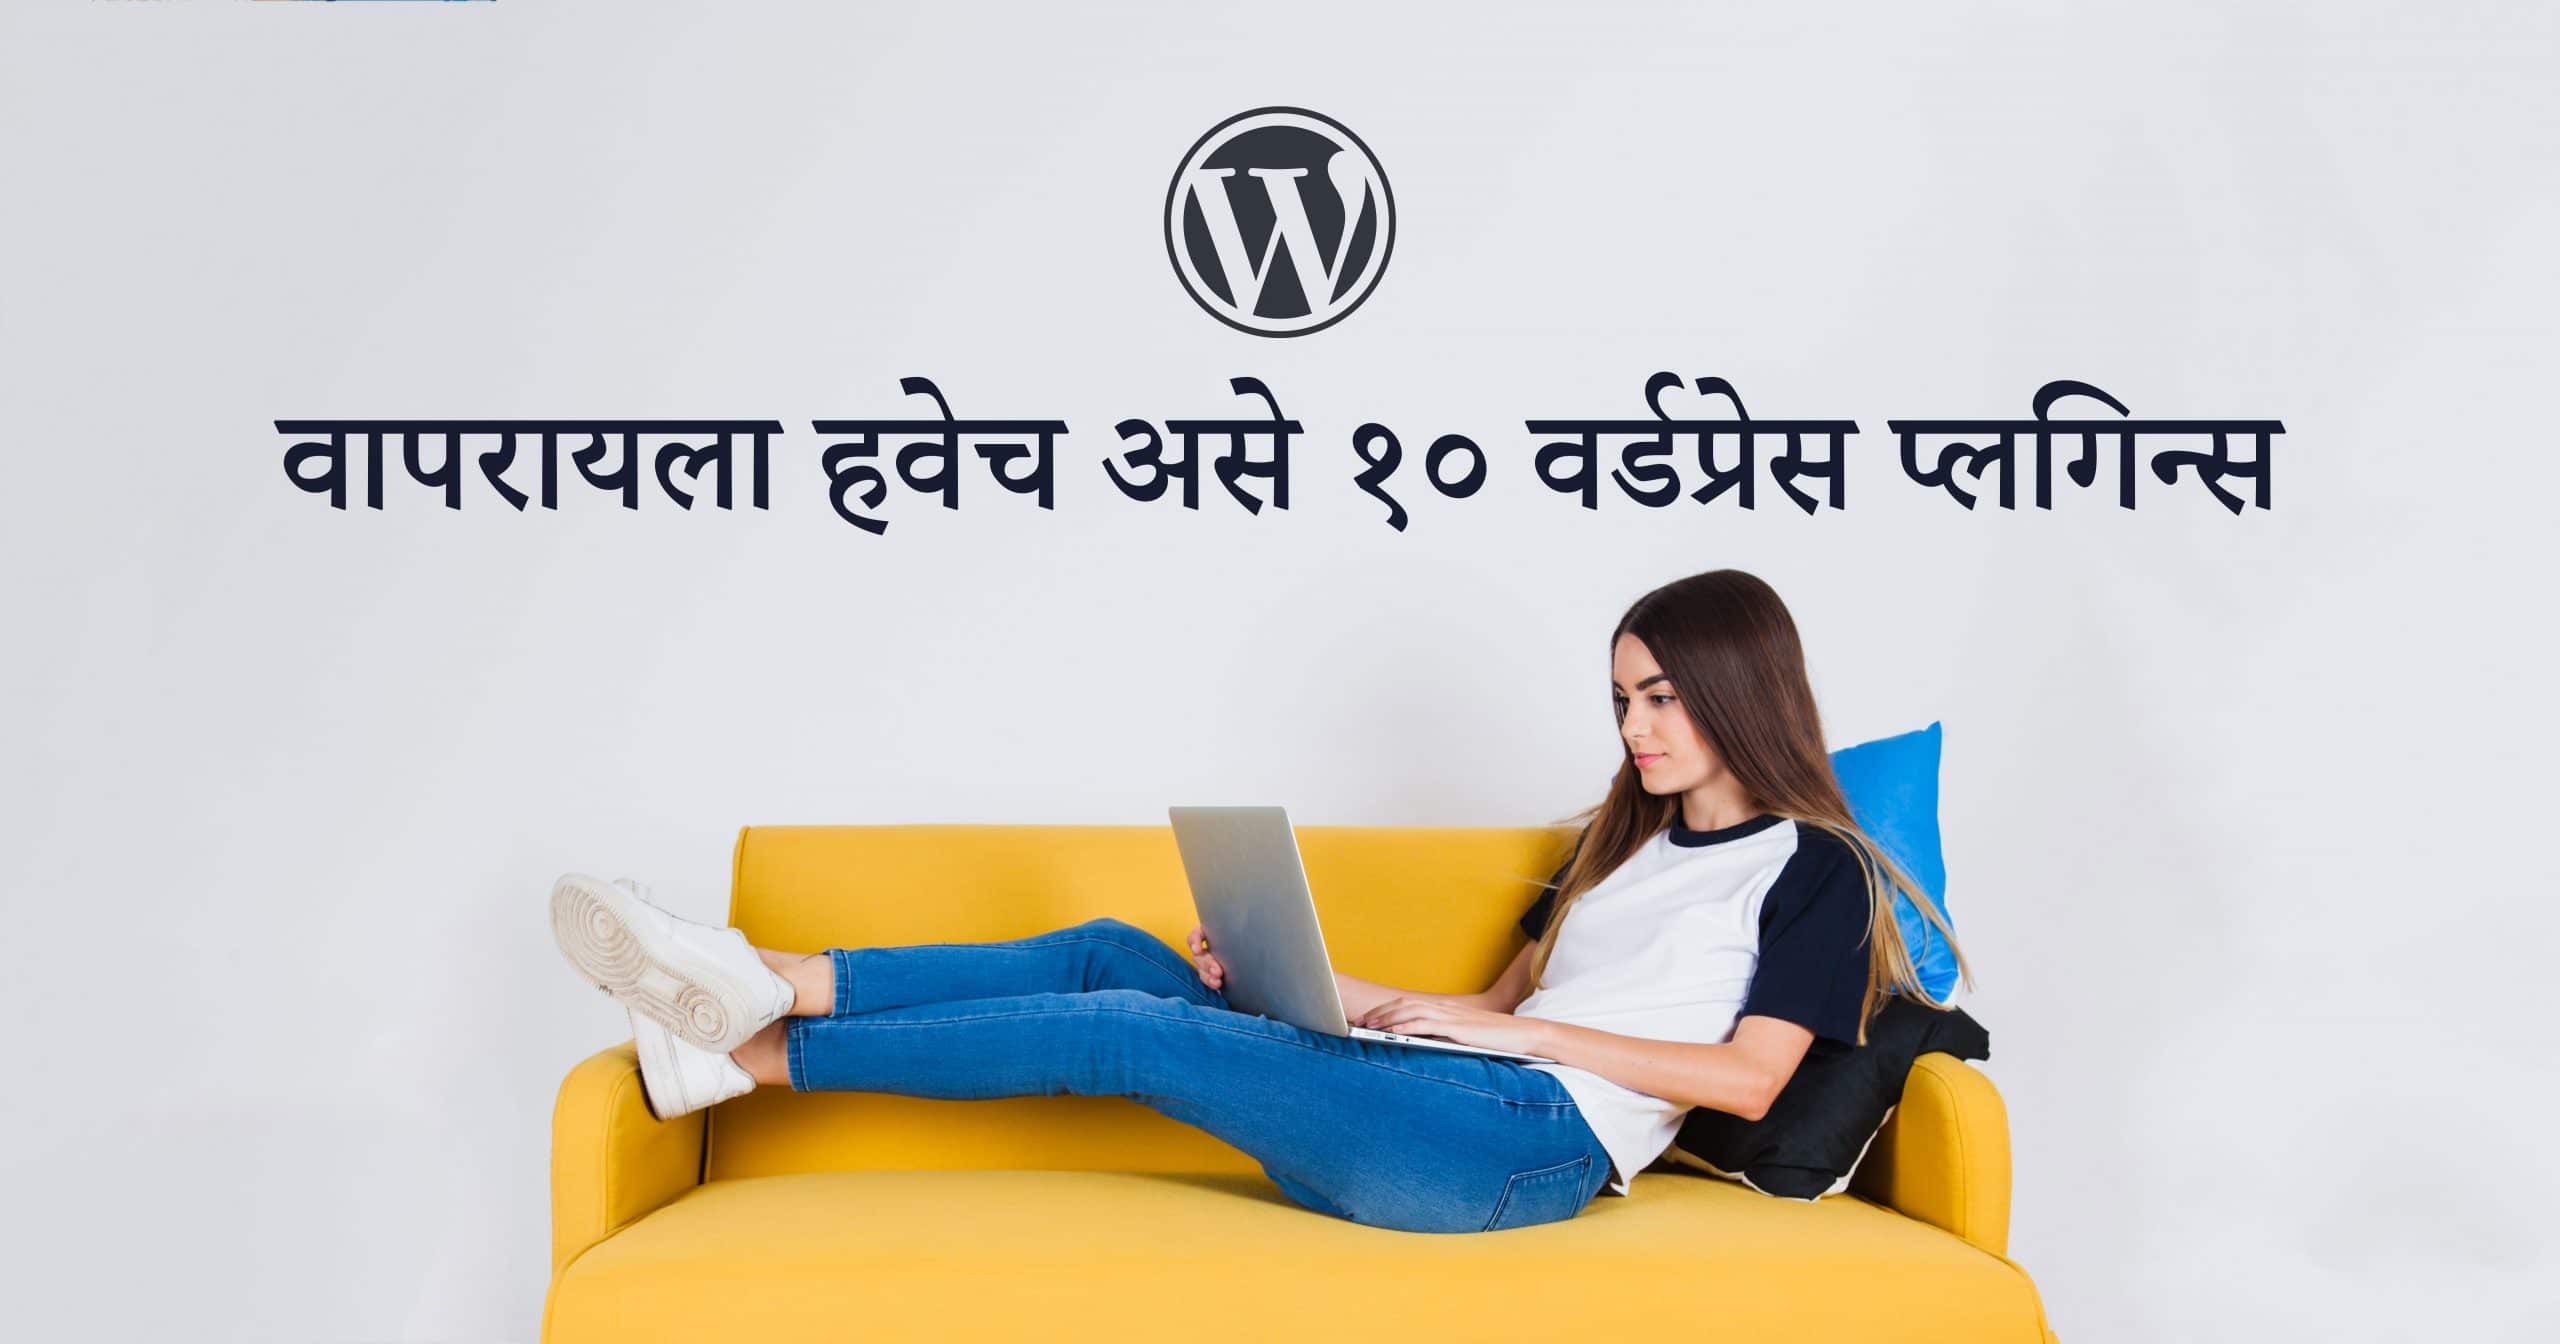 top-10-useful-wordpress-plugins-list-in-marathi